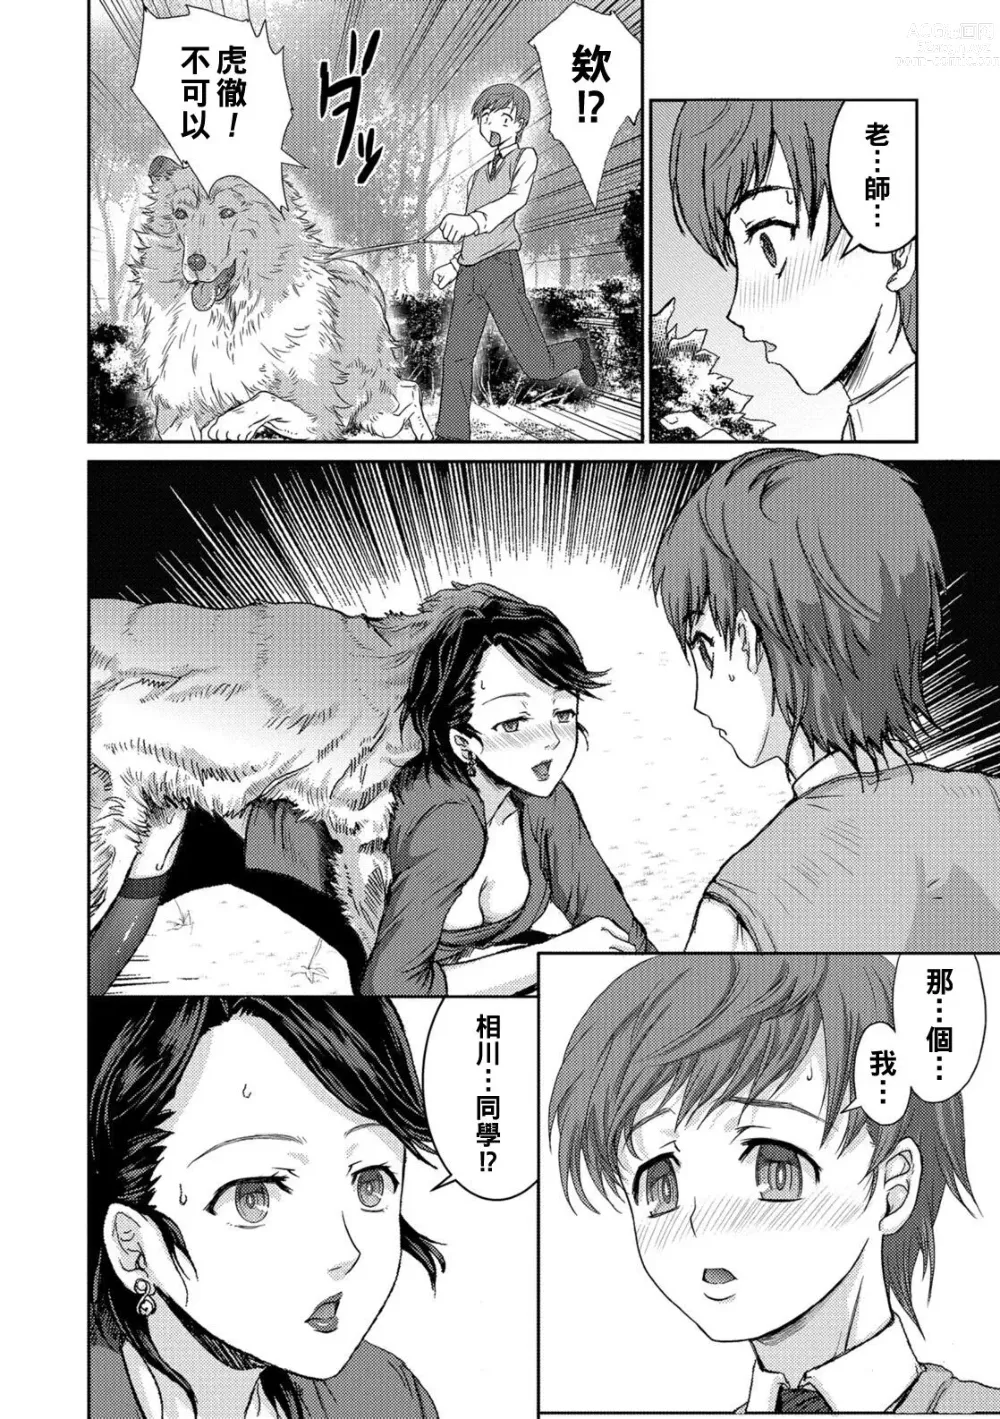 Page 8 of manga Honoguraki Mori no Reizoku -The SUIT and DOG-